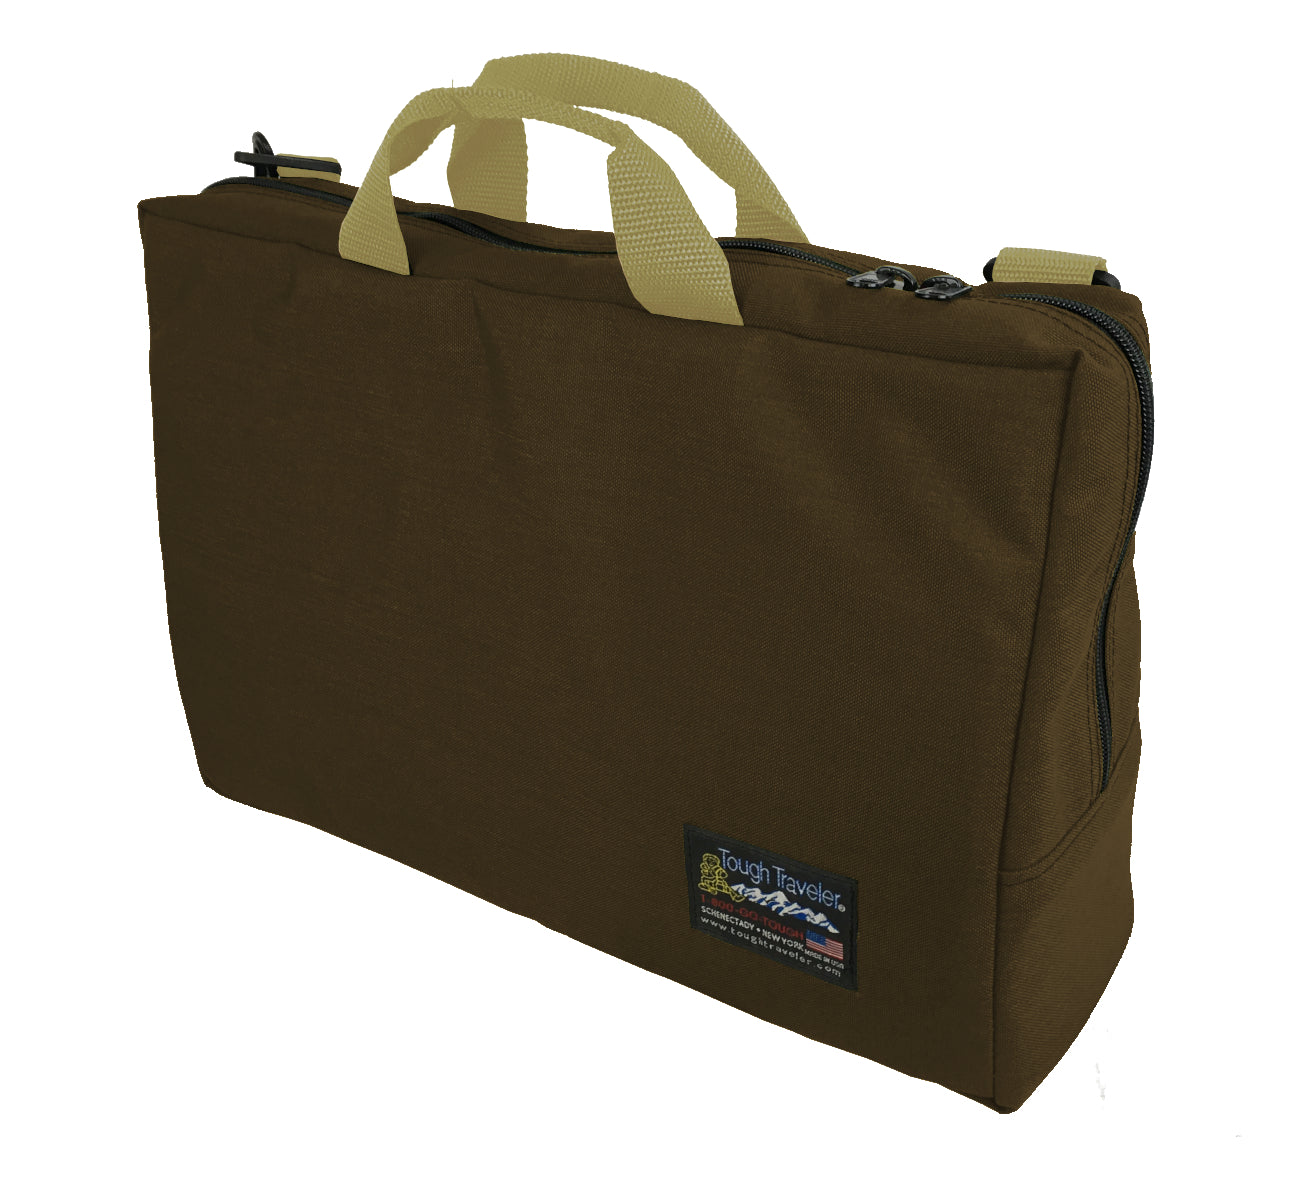 Made in USA WEDGE Laptop Bag Laptop Bags